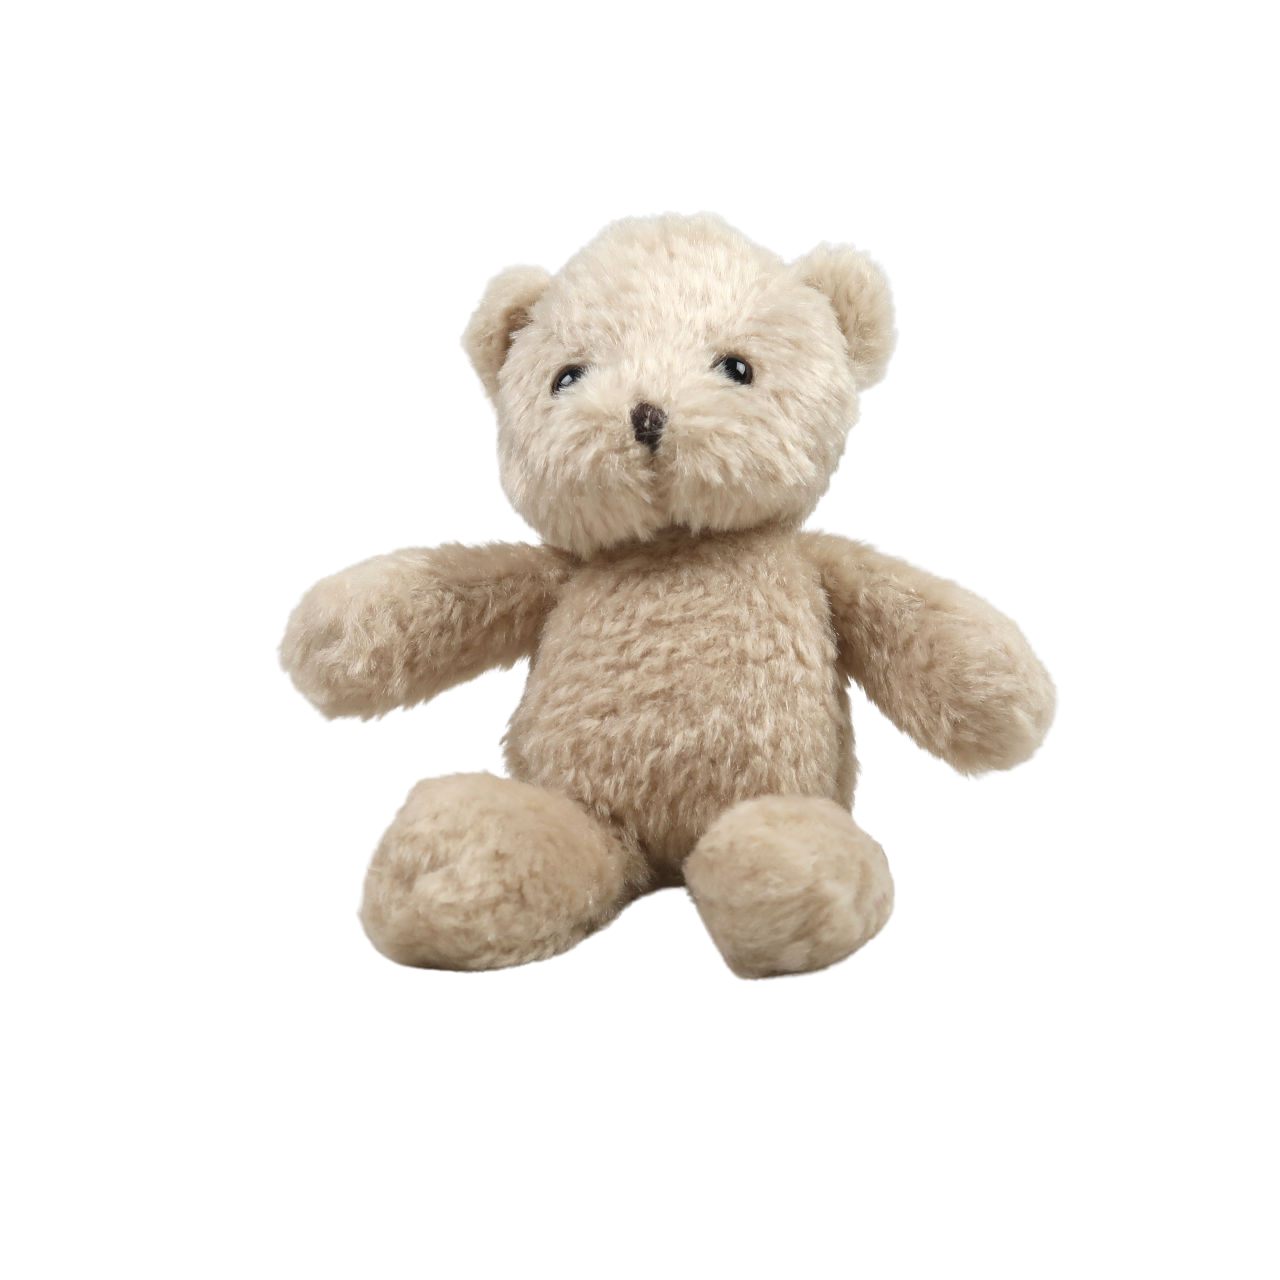 Egmont Toys Morris Teddy Bear - Small